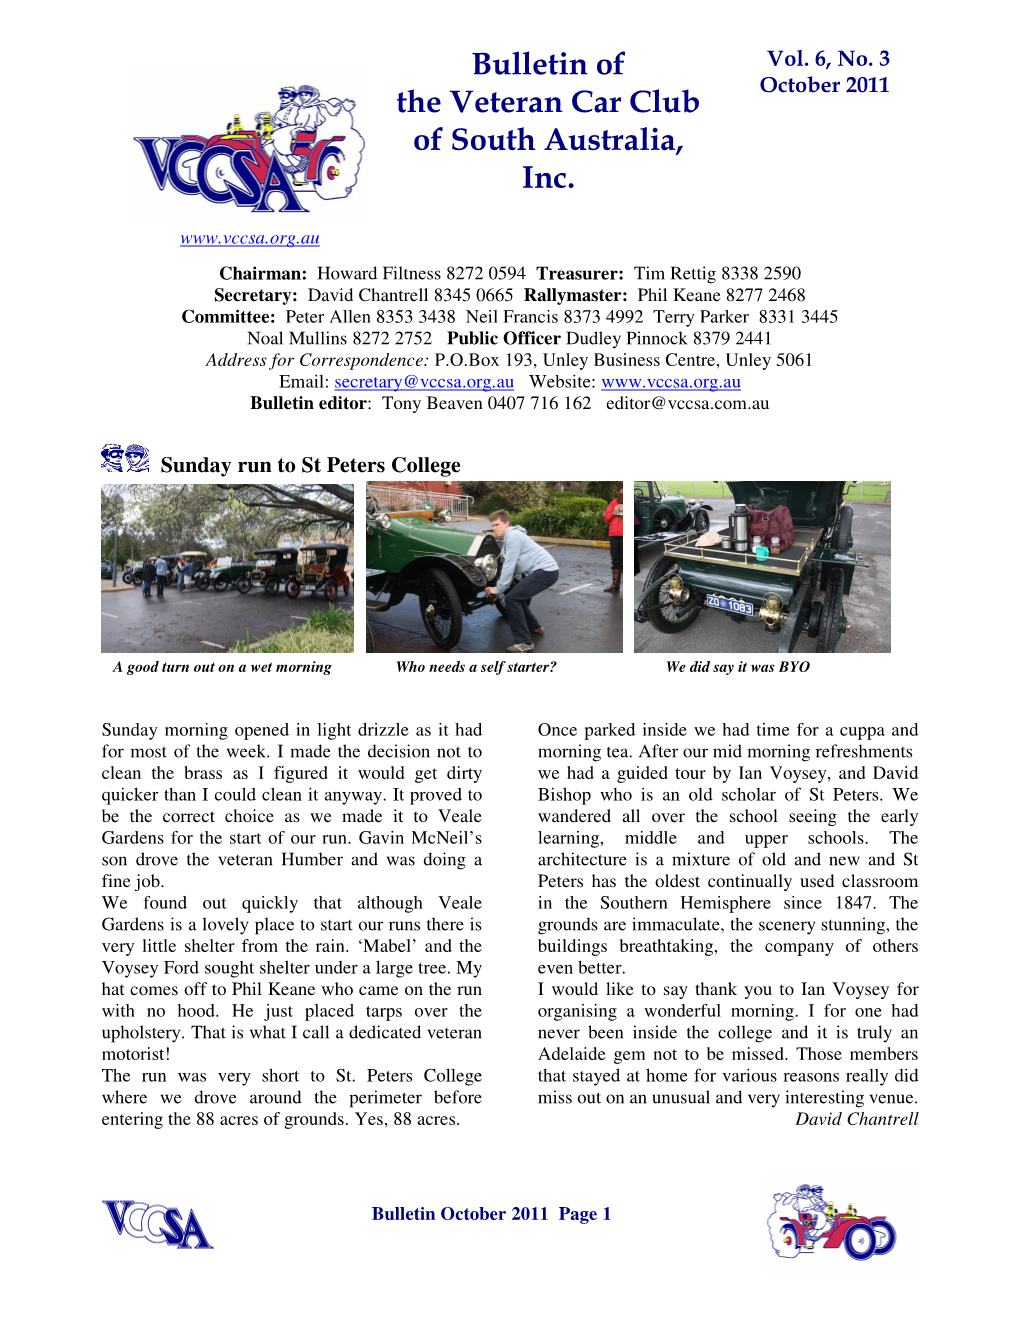 Bulletin of the Veteran Car Club of South Australia, Inc